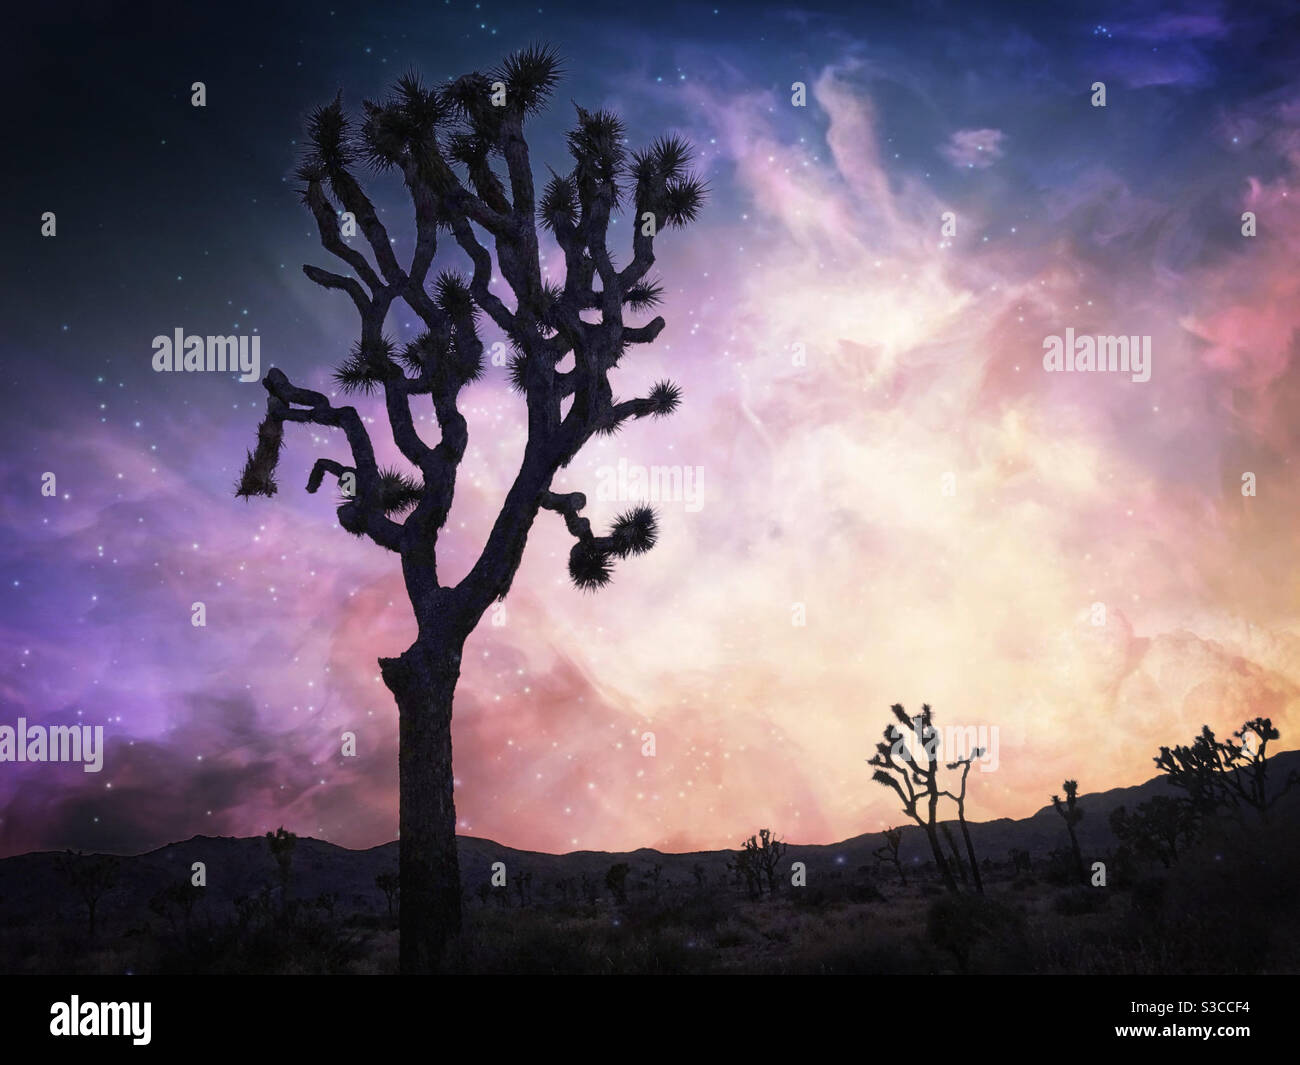 Dramatic galaxy sky and joshua tree silhouette Stock Photo